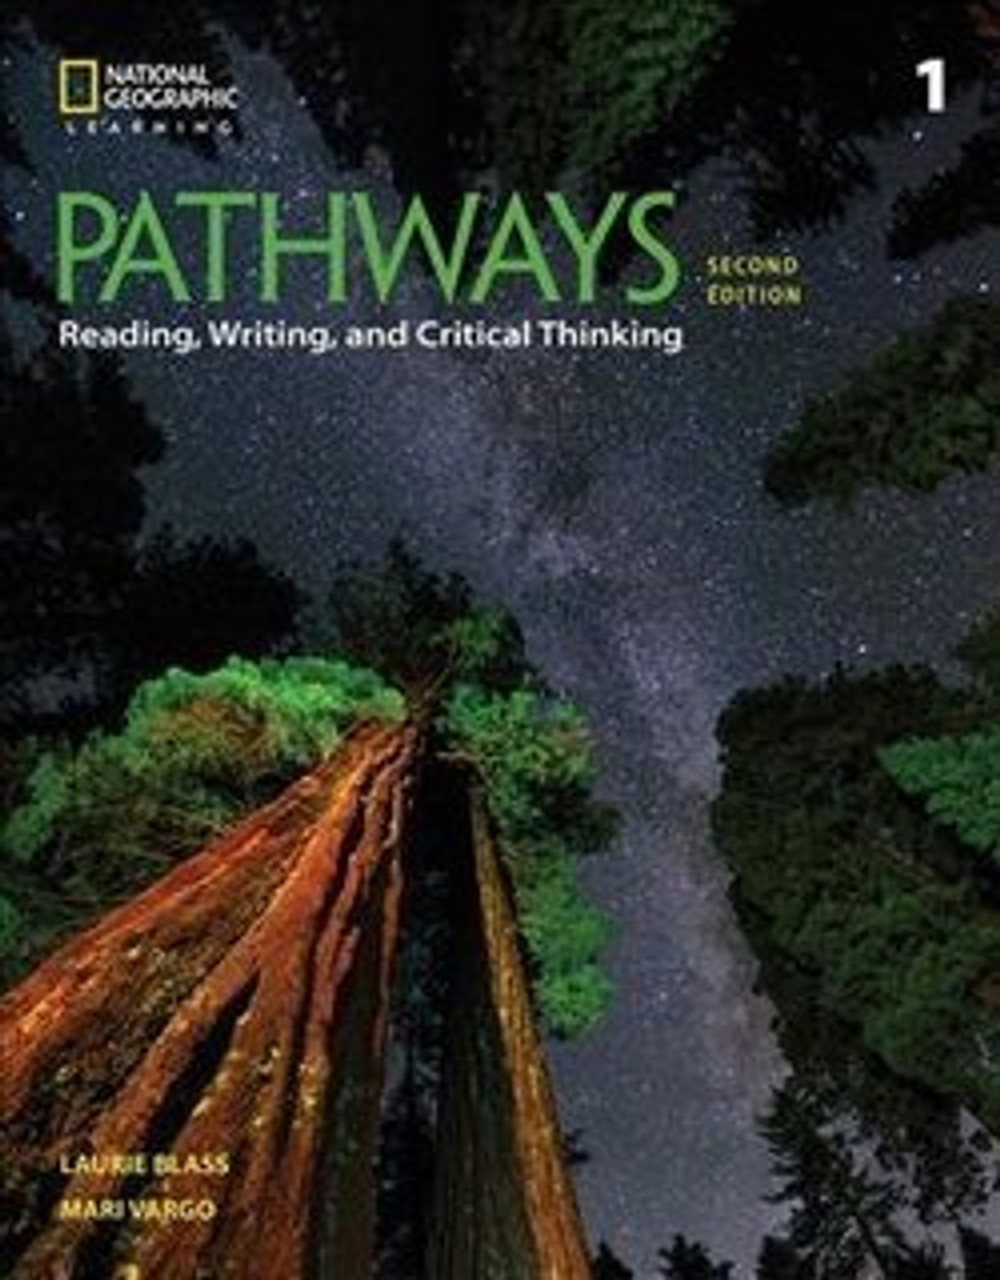 Press　Reading,　Critical　Teacher's　Thinking　Writing,　Pathways:　Eton　Guide